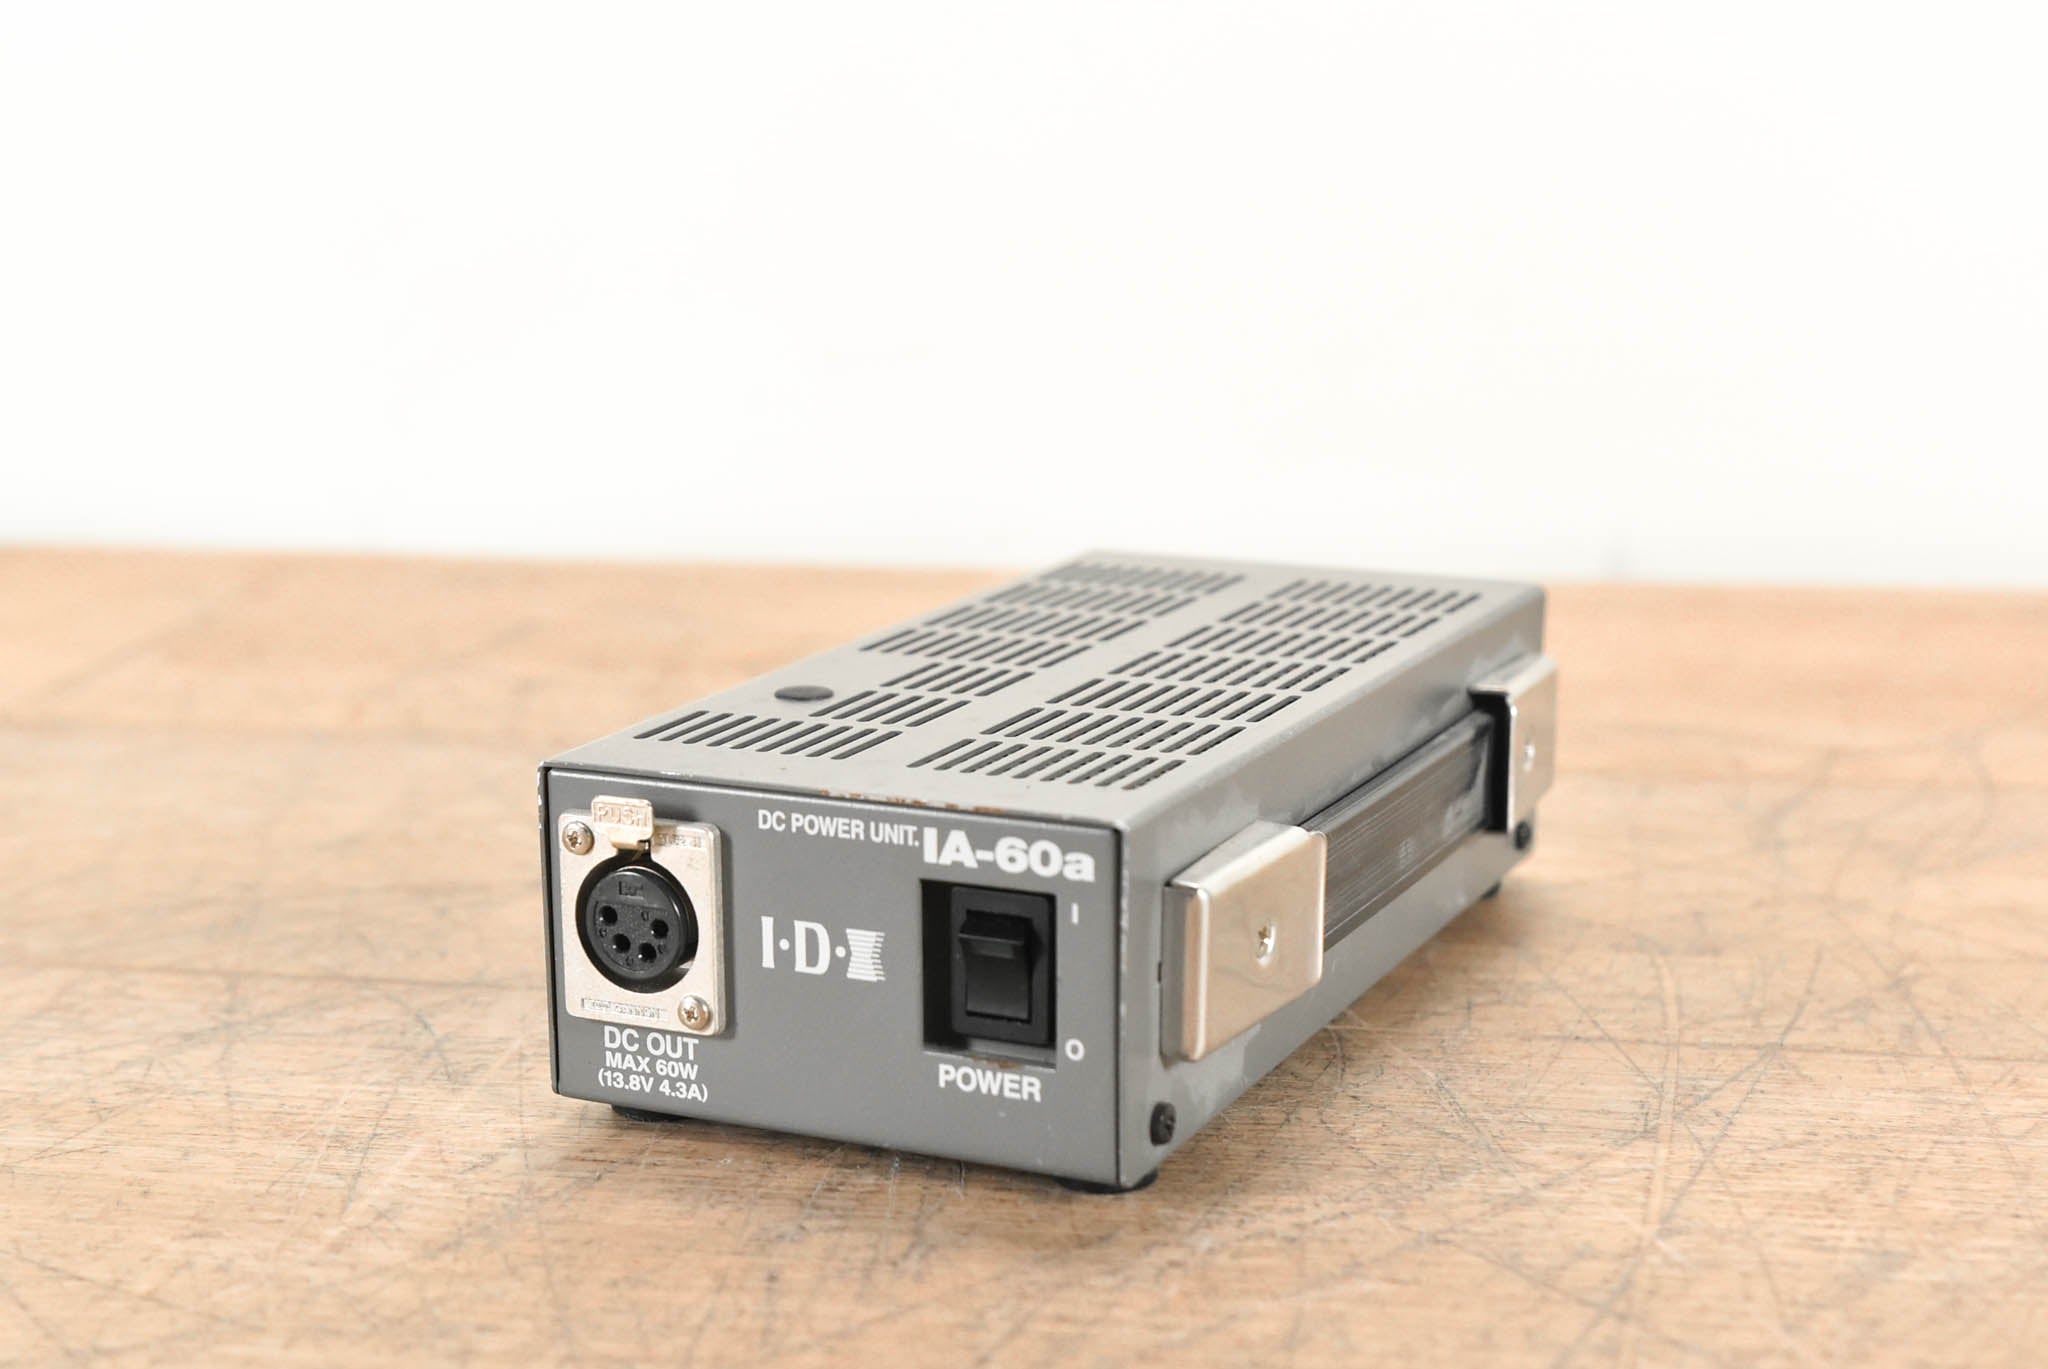 IDX System Technology IA-60a Single-Channel DC Power Supply